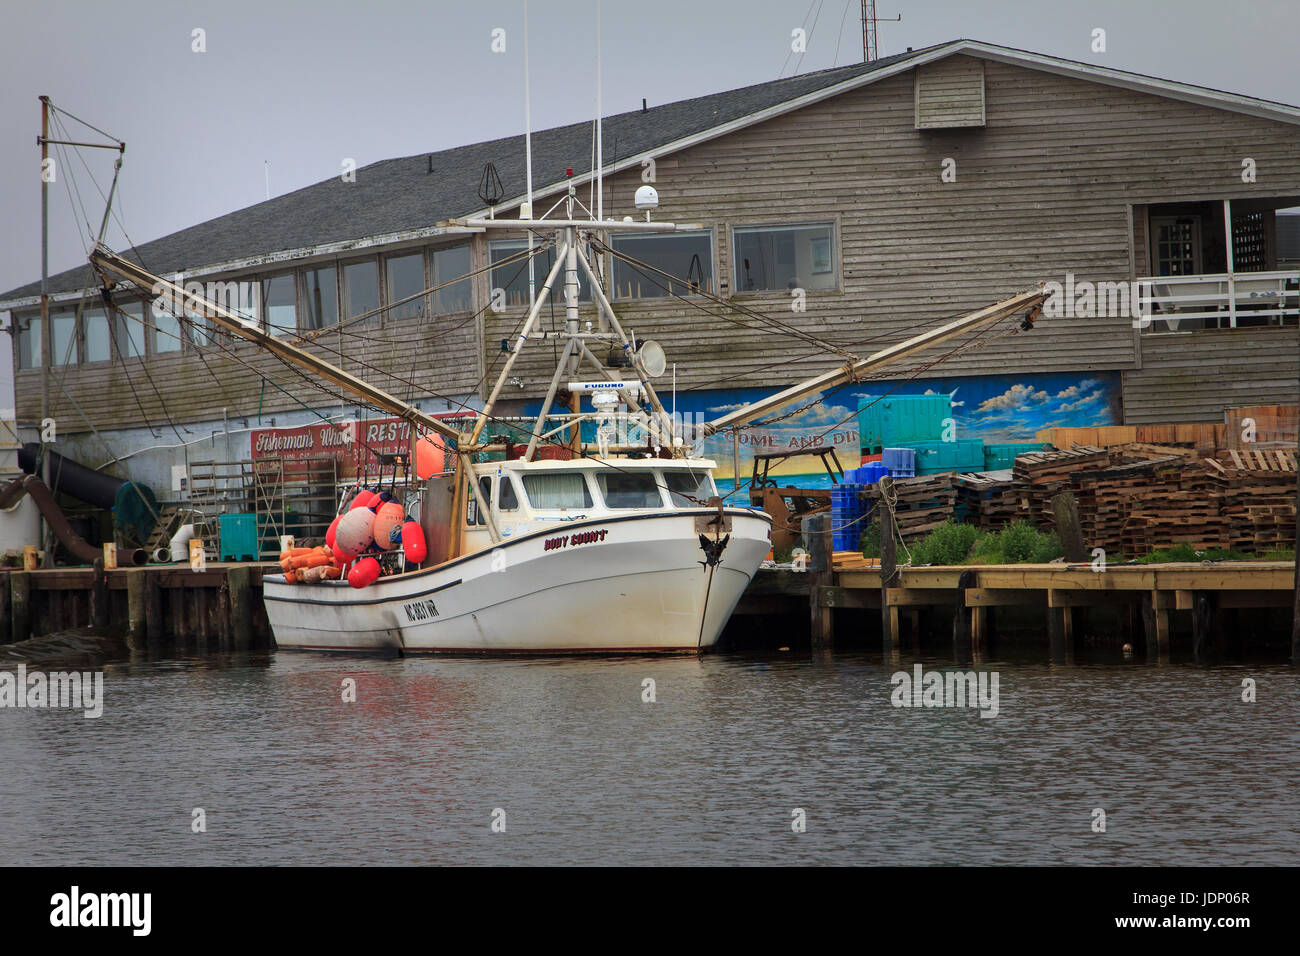 https://c8.alamy.com/comp/JDP06R/commercial-fishing-boat-in-wanchese-harbor-outer-banks-north-carolina-JDP06R.jpg